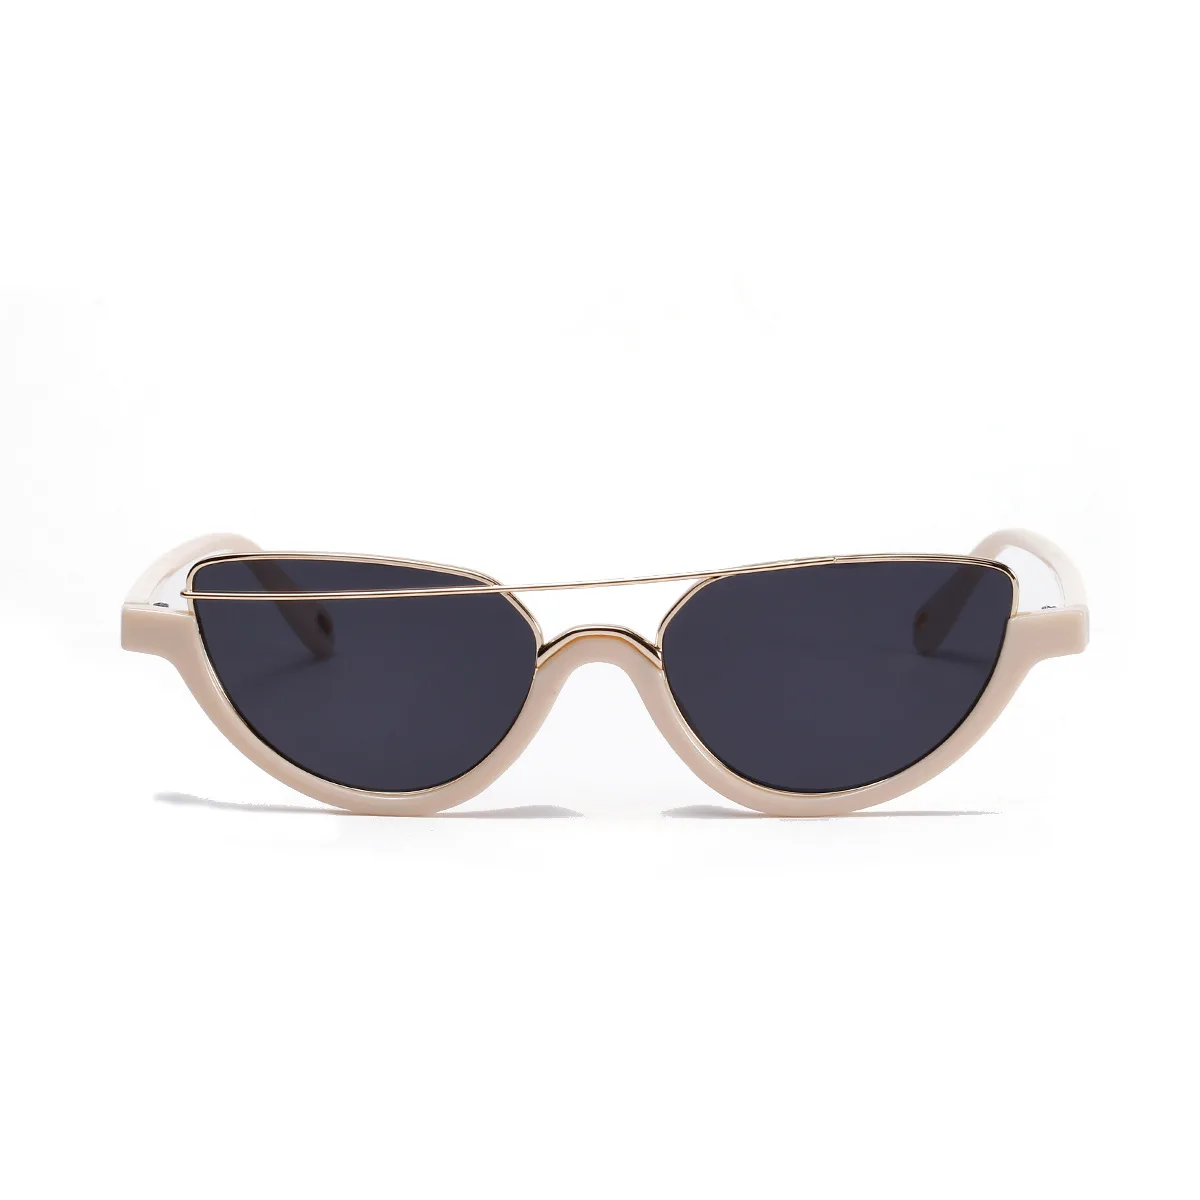 Fashion Cat Eye Sunglasses Women Vintage Small Half Frame Sunglasses Female Eyewear Classic Shades Anti-glare UV400